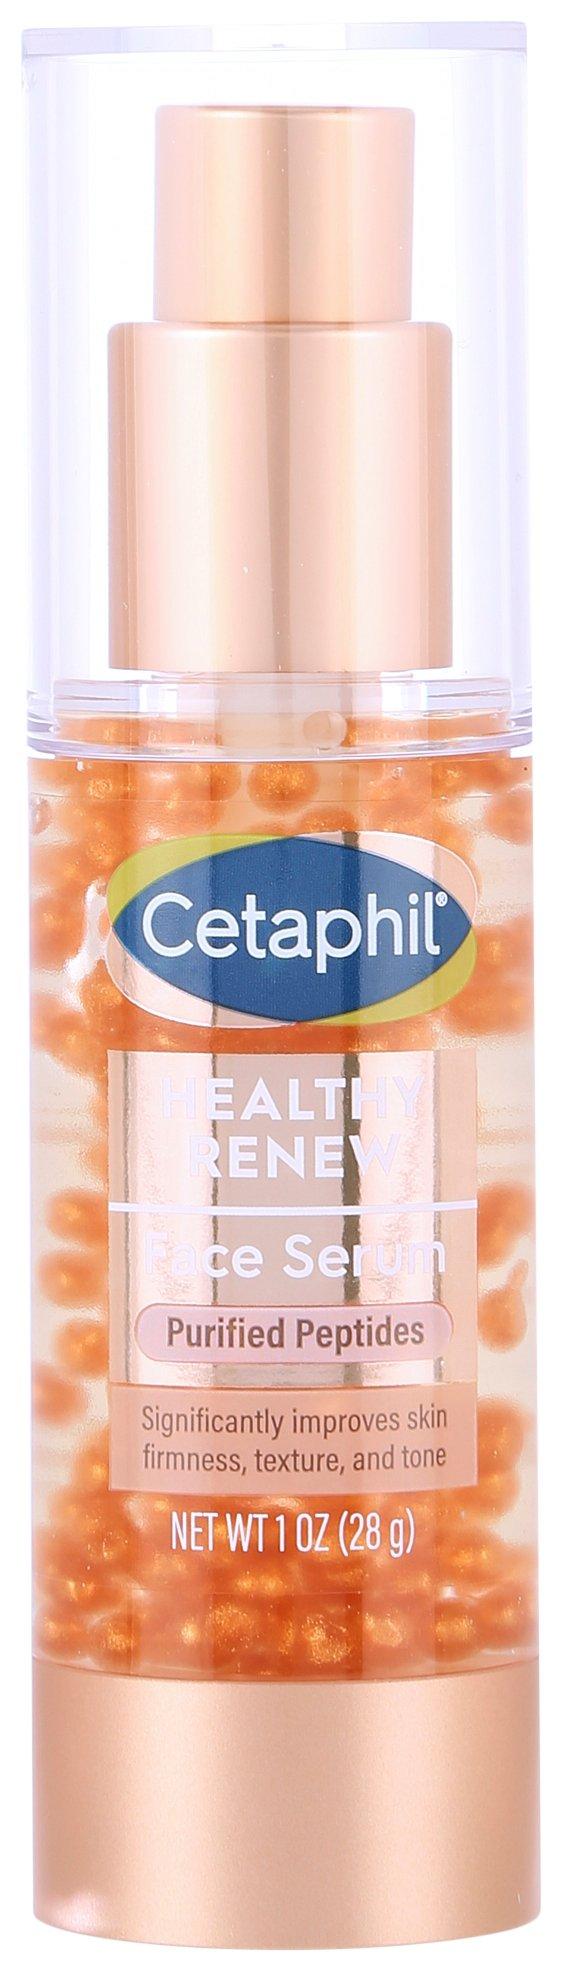 Cetaphil 1 Oz. Healthy Renew Face Serum